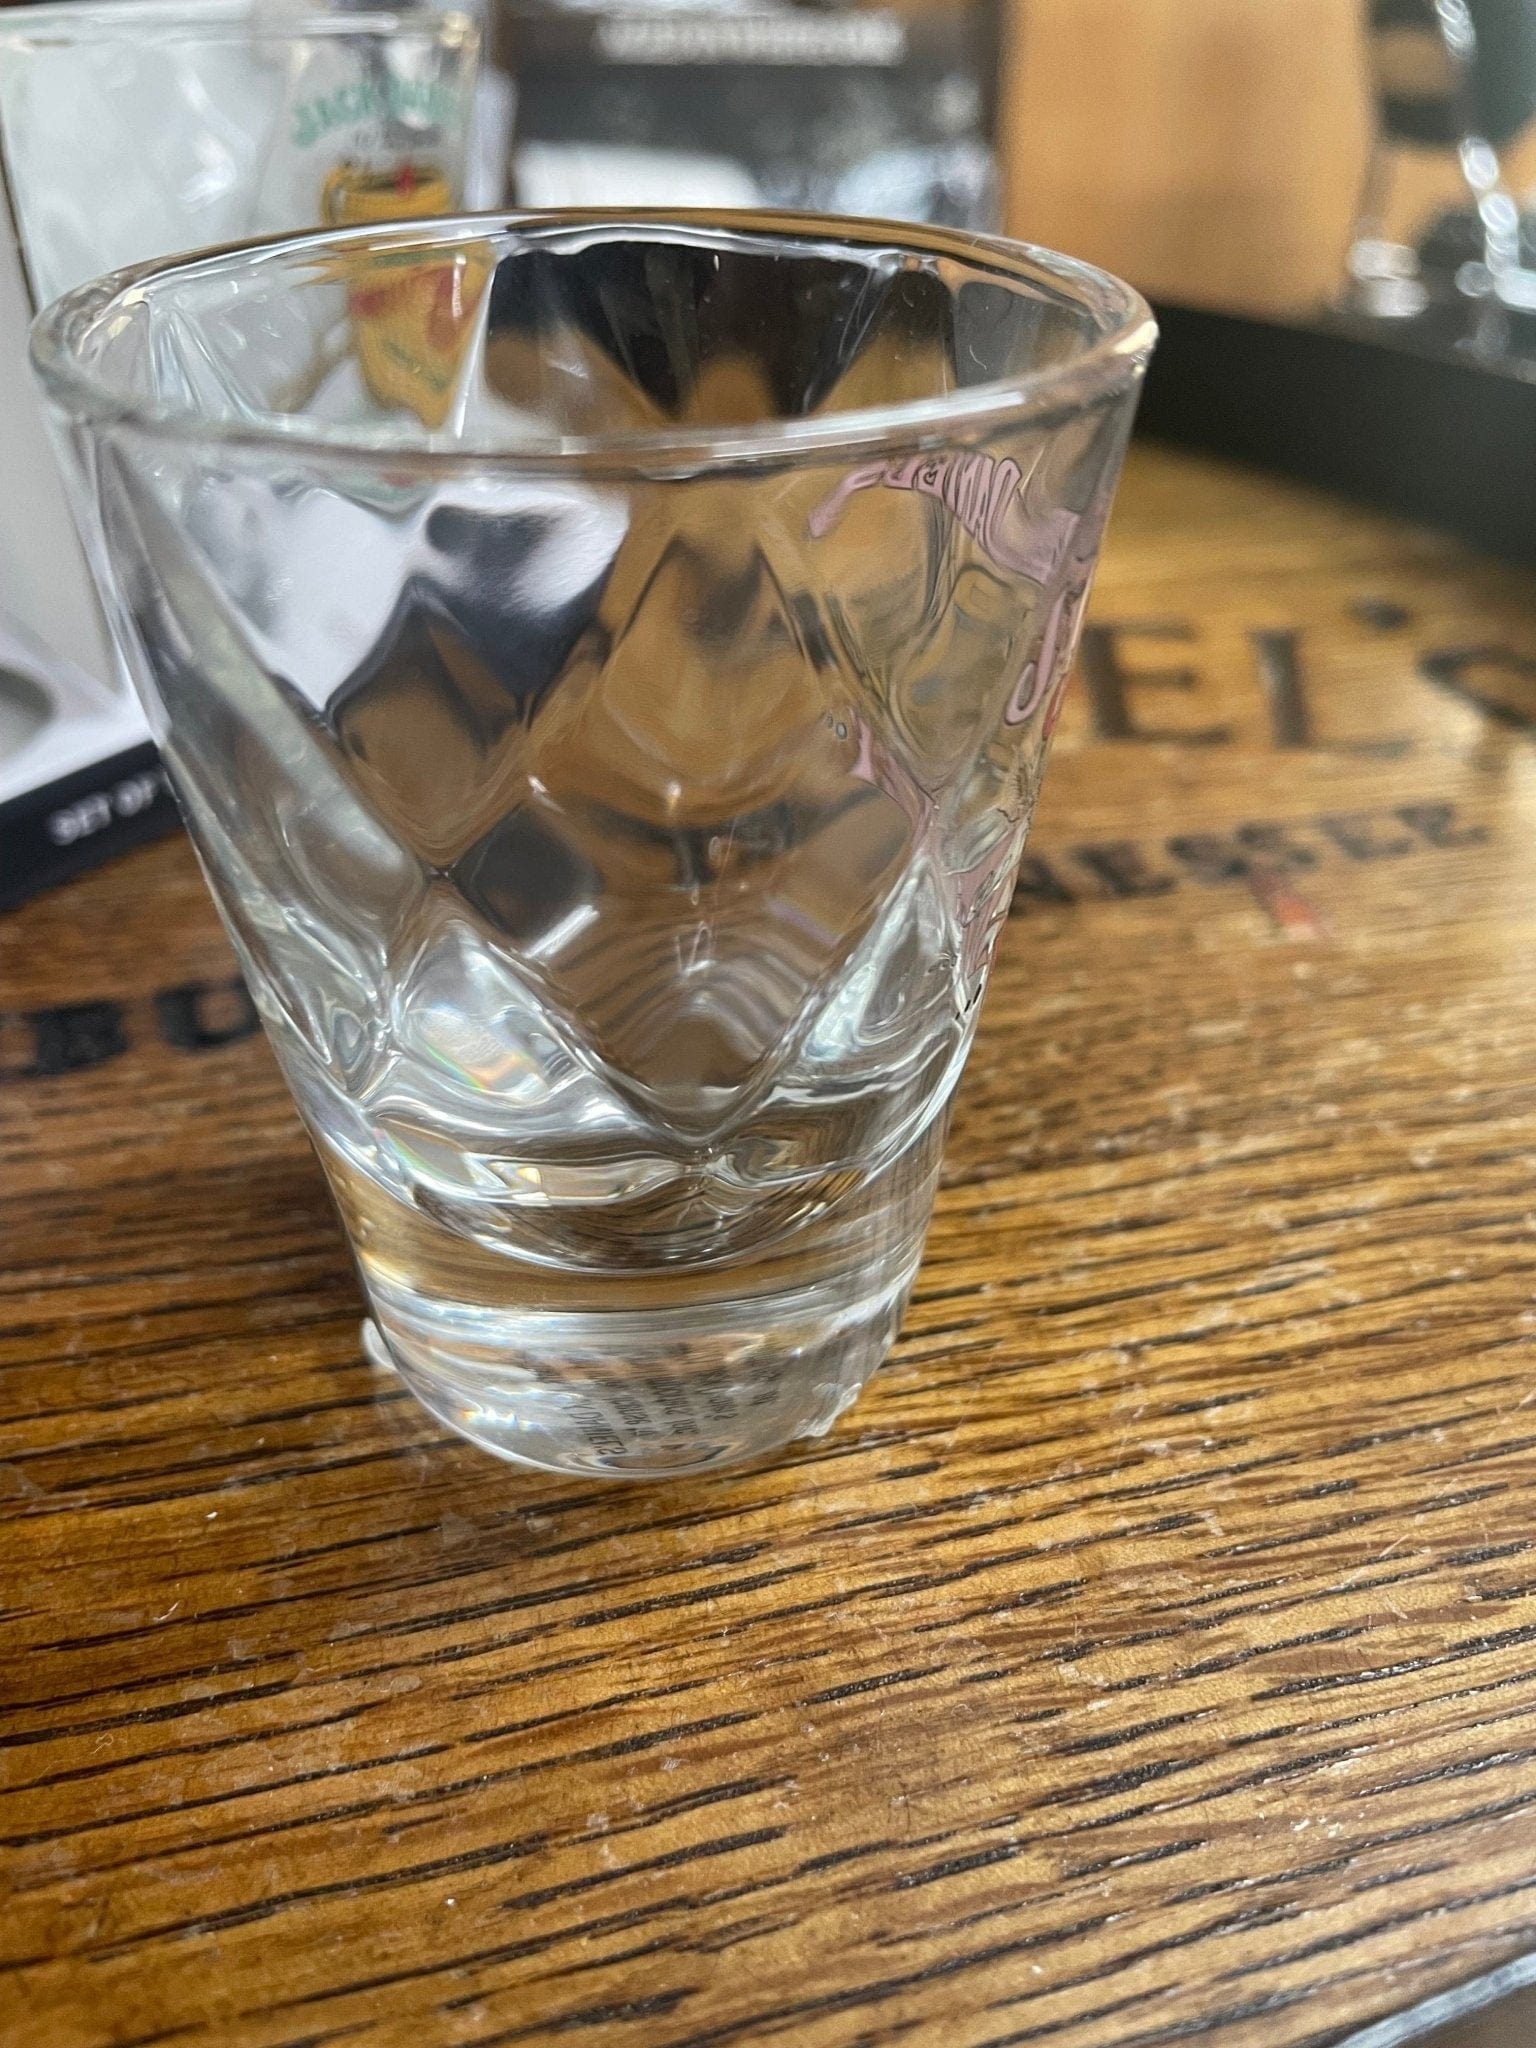 Jack Daniel’s Boxed Set 2 Shot Glasses - The Whiskey Cave